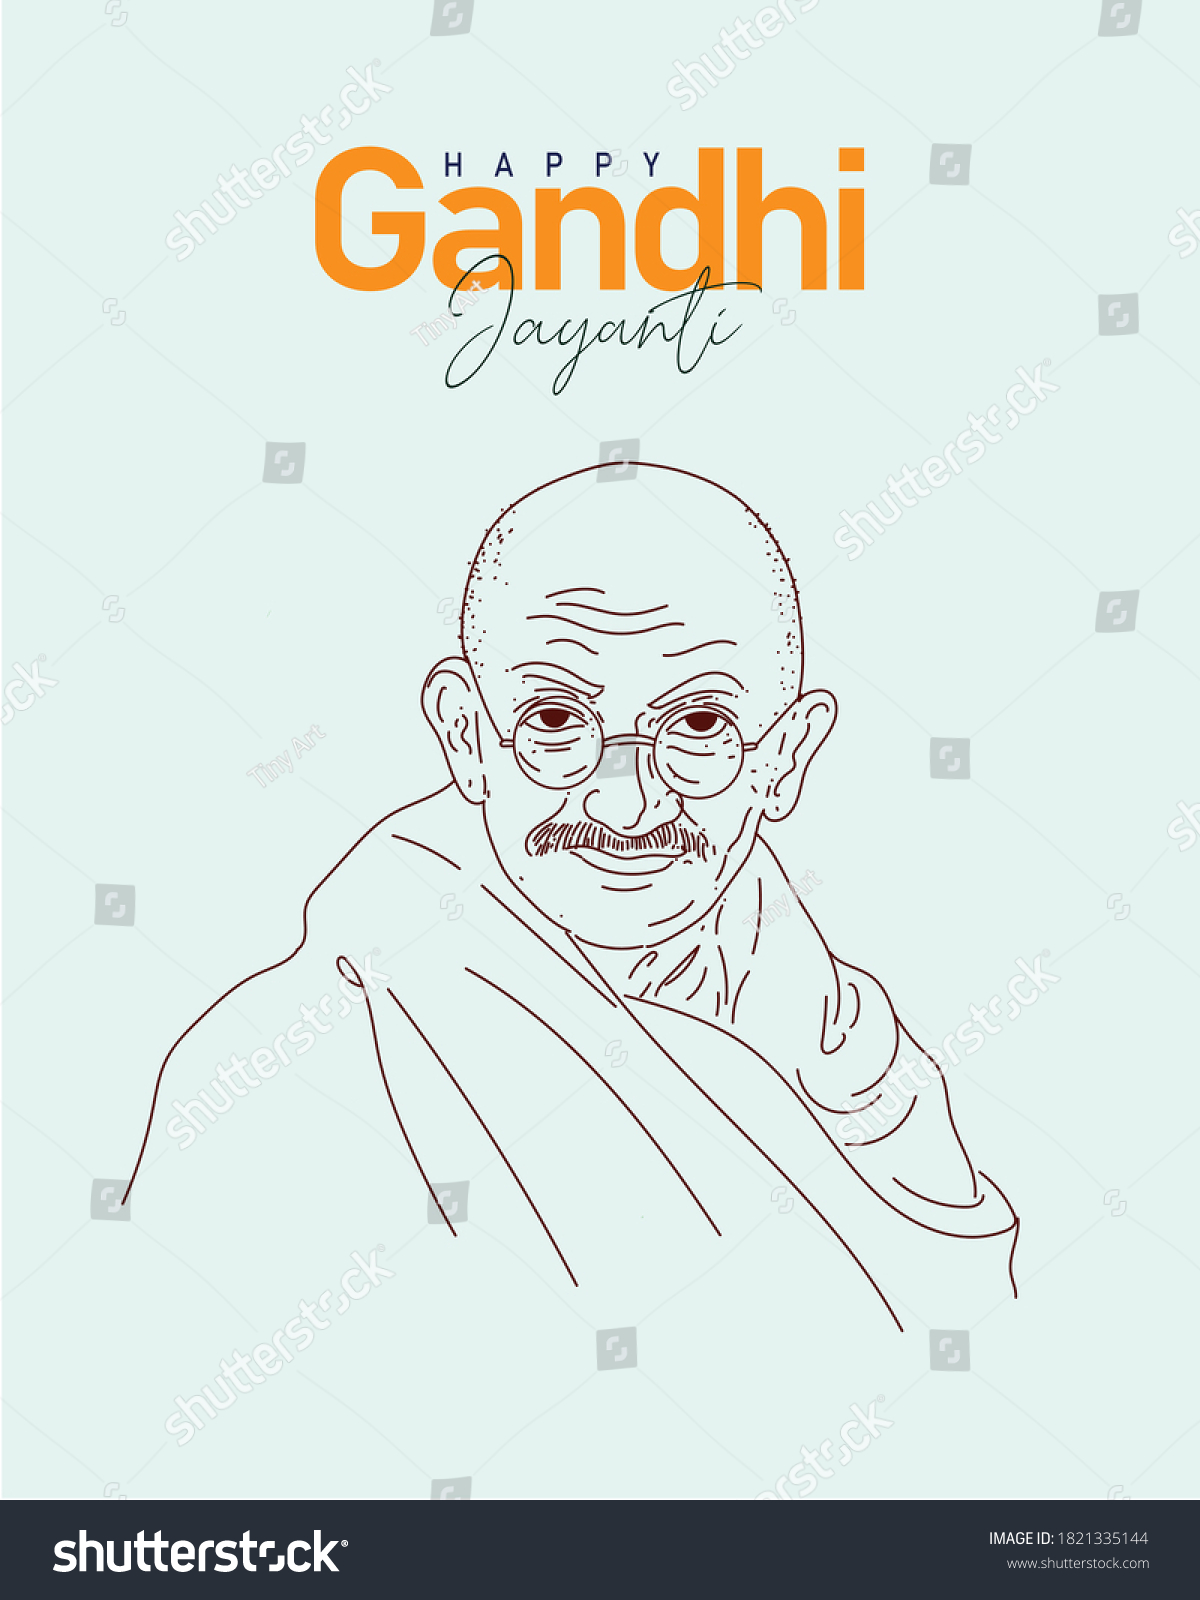 Happy Gandhi Jayanti Text Gandhi Vector Stock Vector (Royalty Free ...